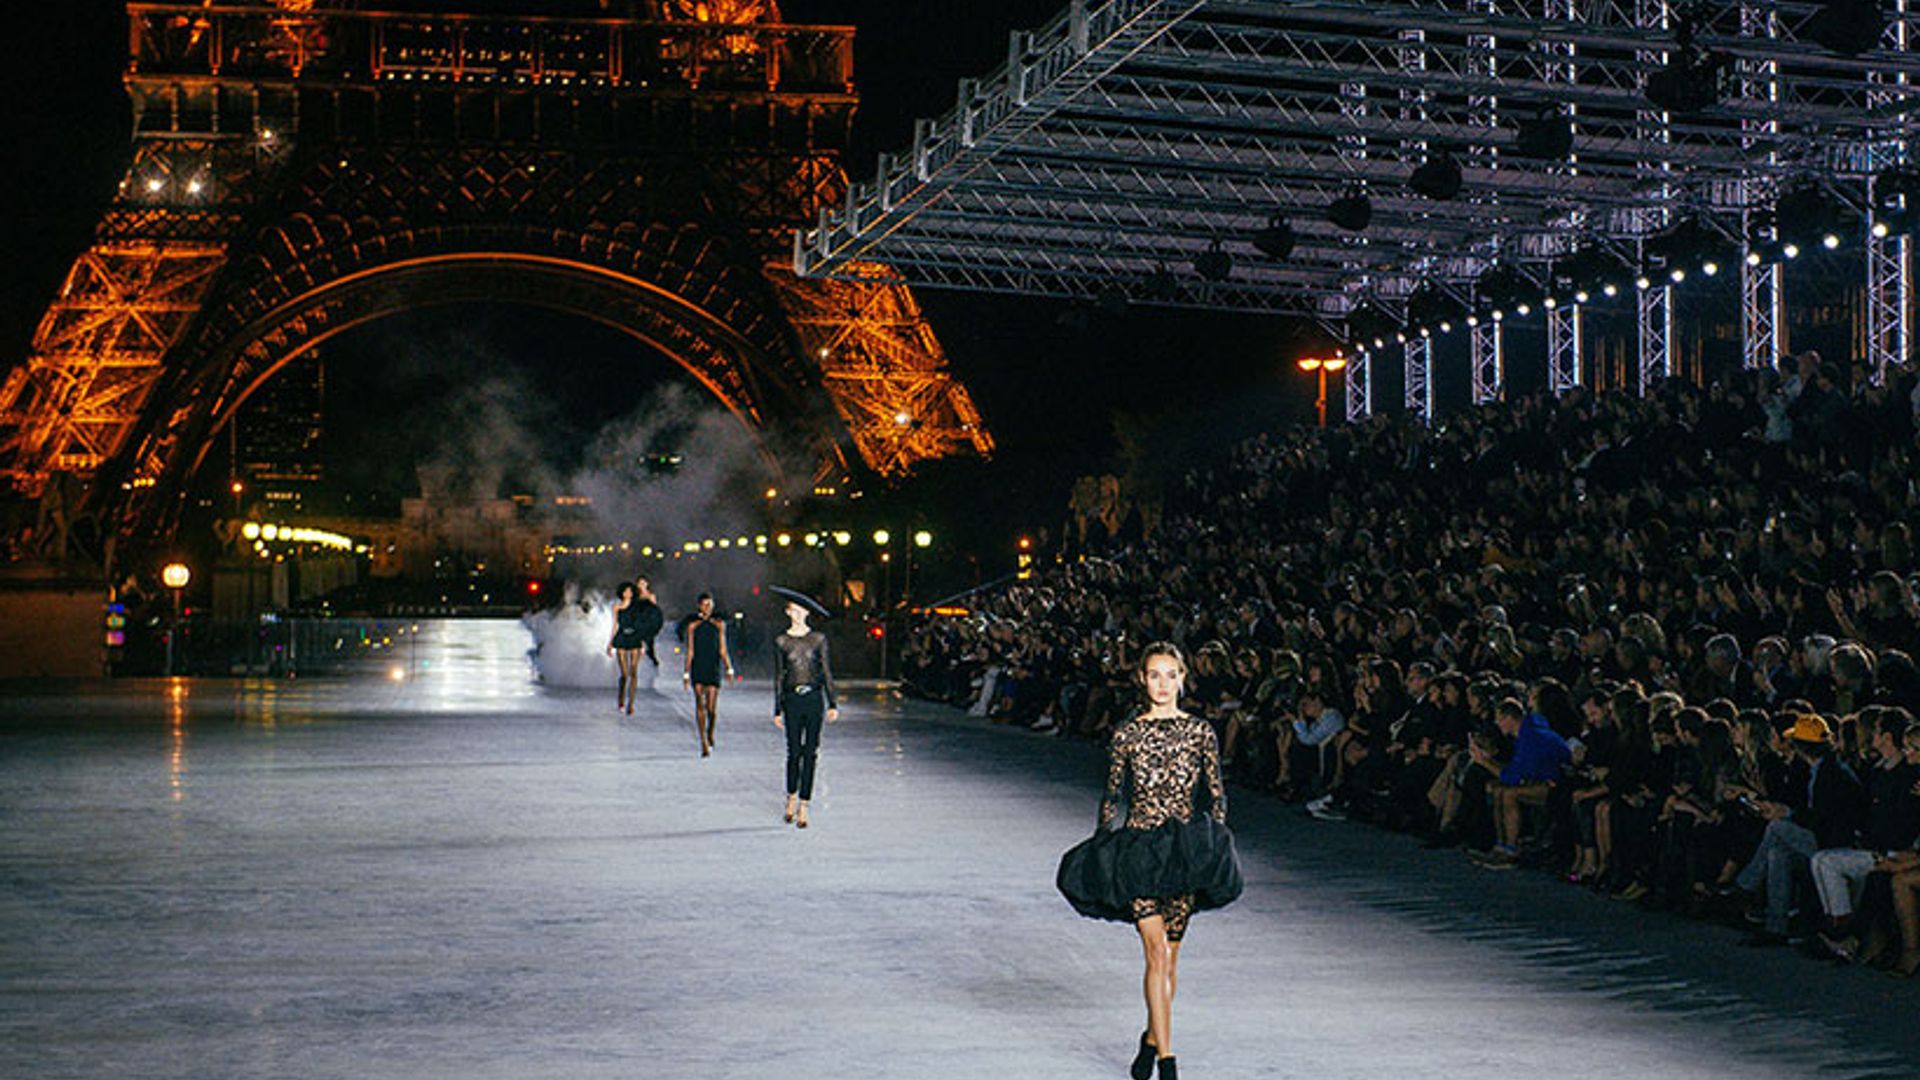 Saint Laurent stages fashion show underneath Eiffel Tower | HELLO!